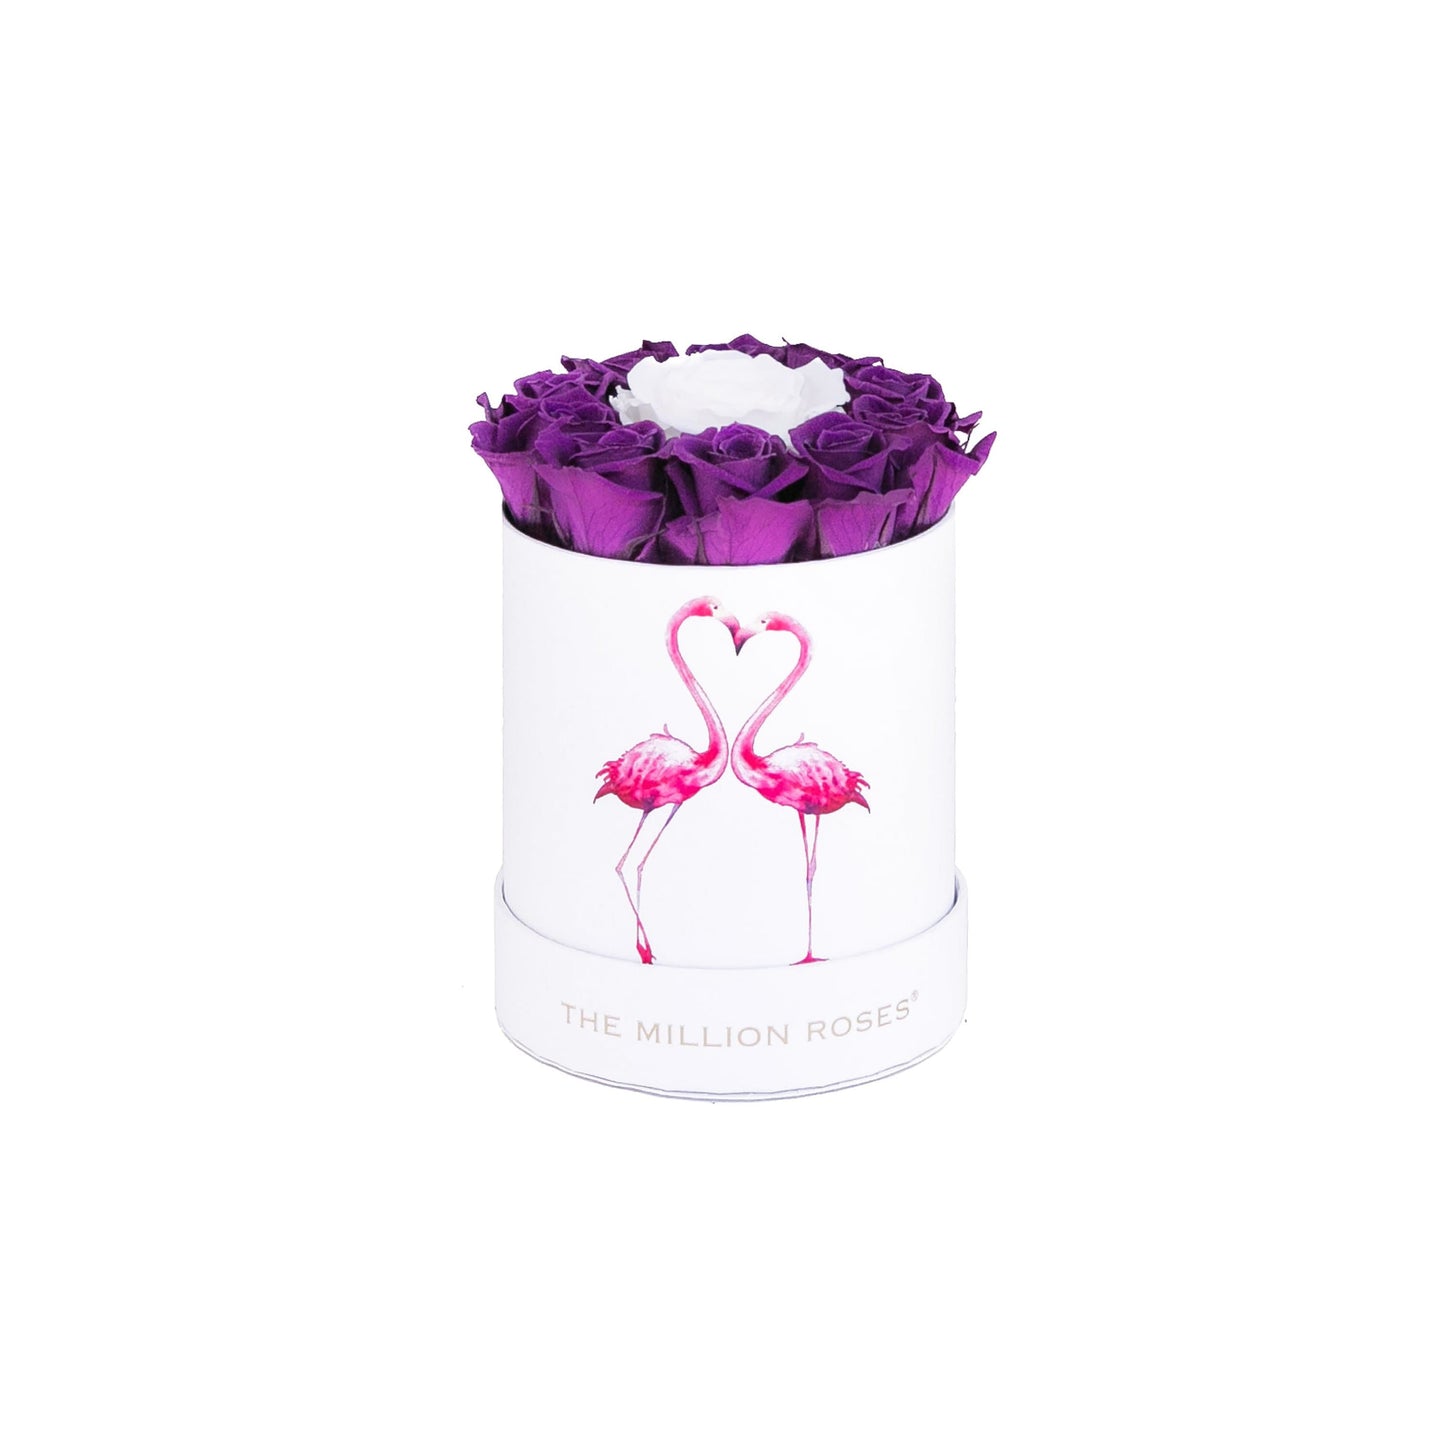 Basic White Box | Flamingo Edition | Bright Purple Mini Roses - The Million Roses